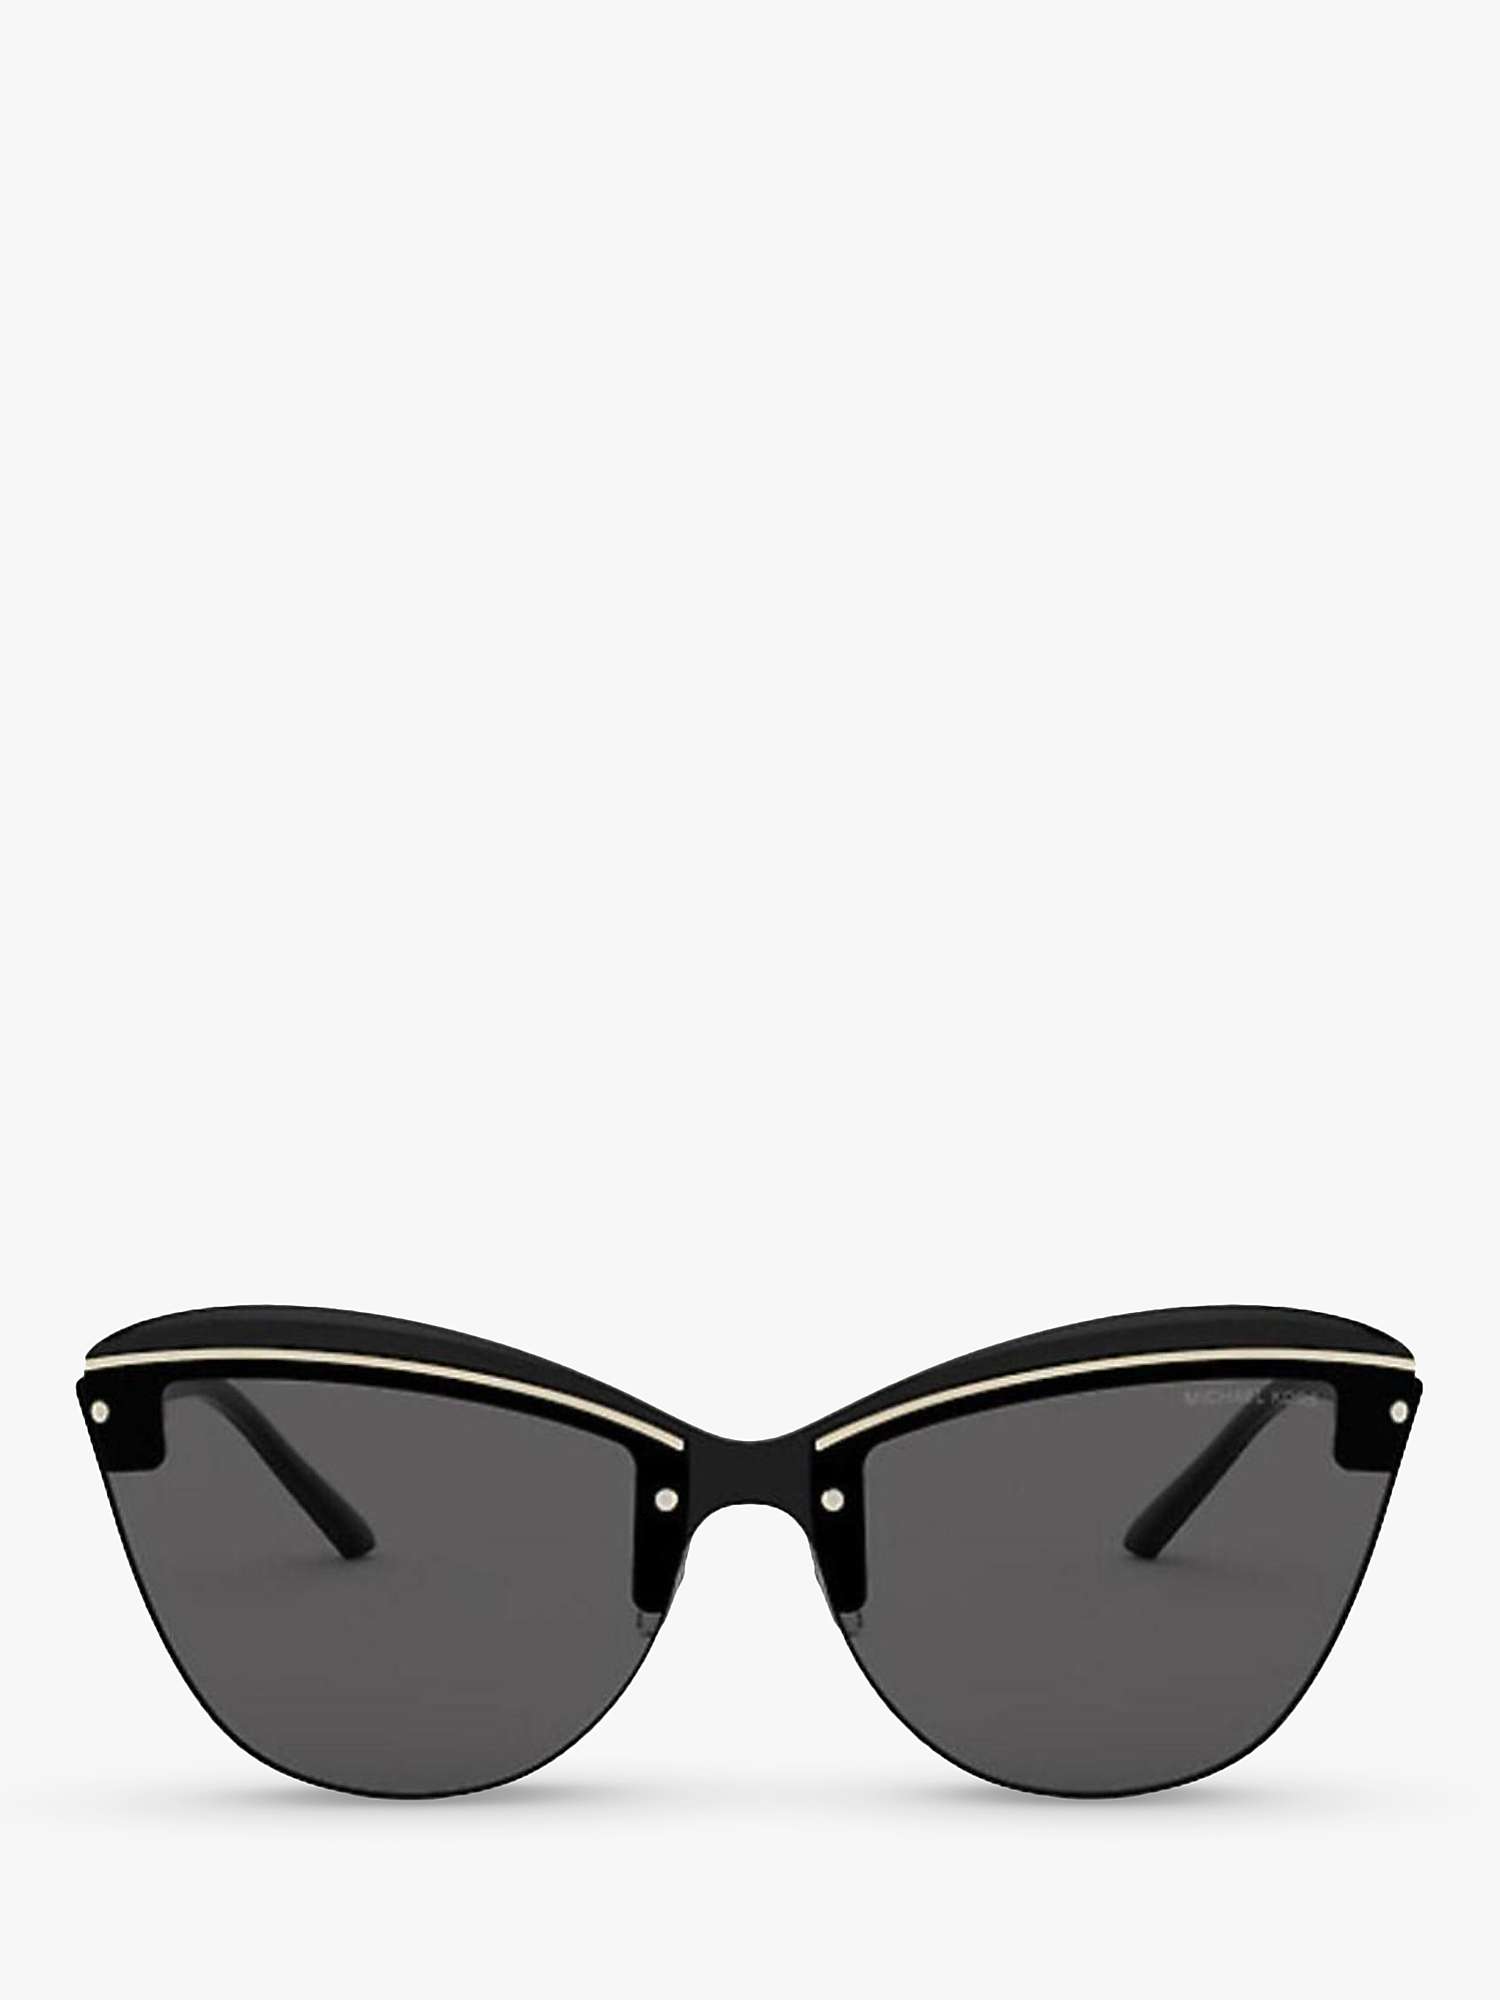 Buy Michael Kors MK2113 Women's Cat's Eye Sunglasses, Black/Grey Online at johnlewis.com